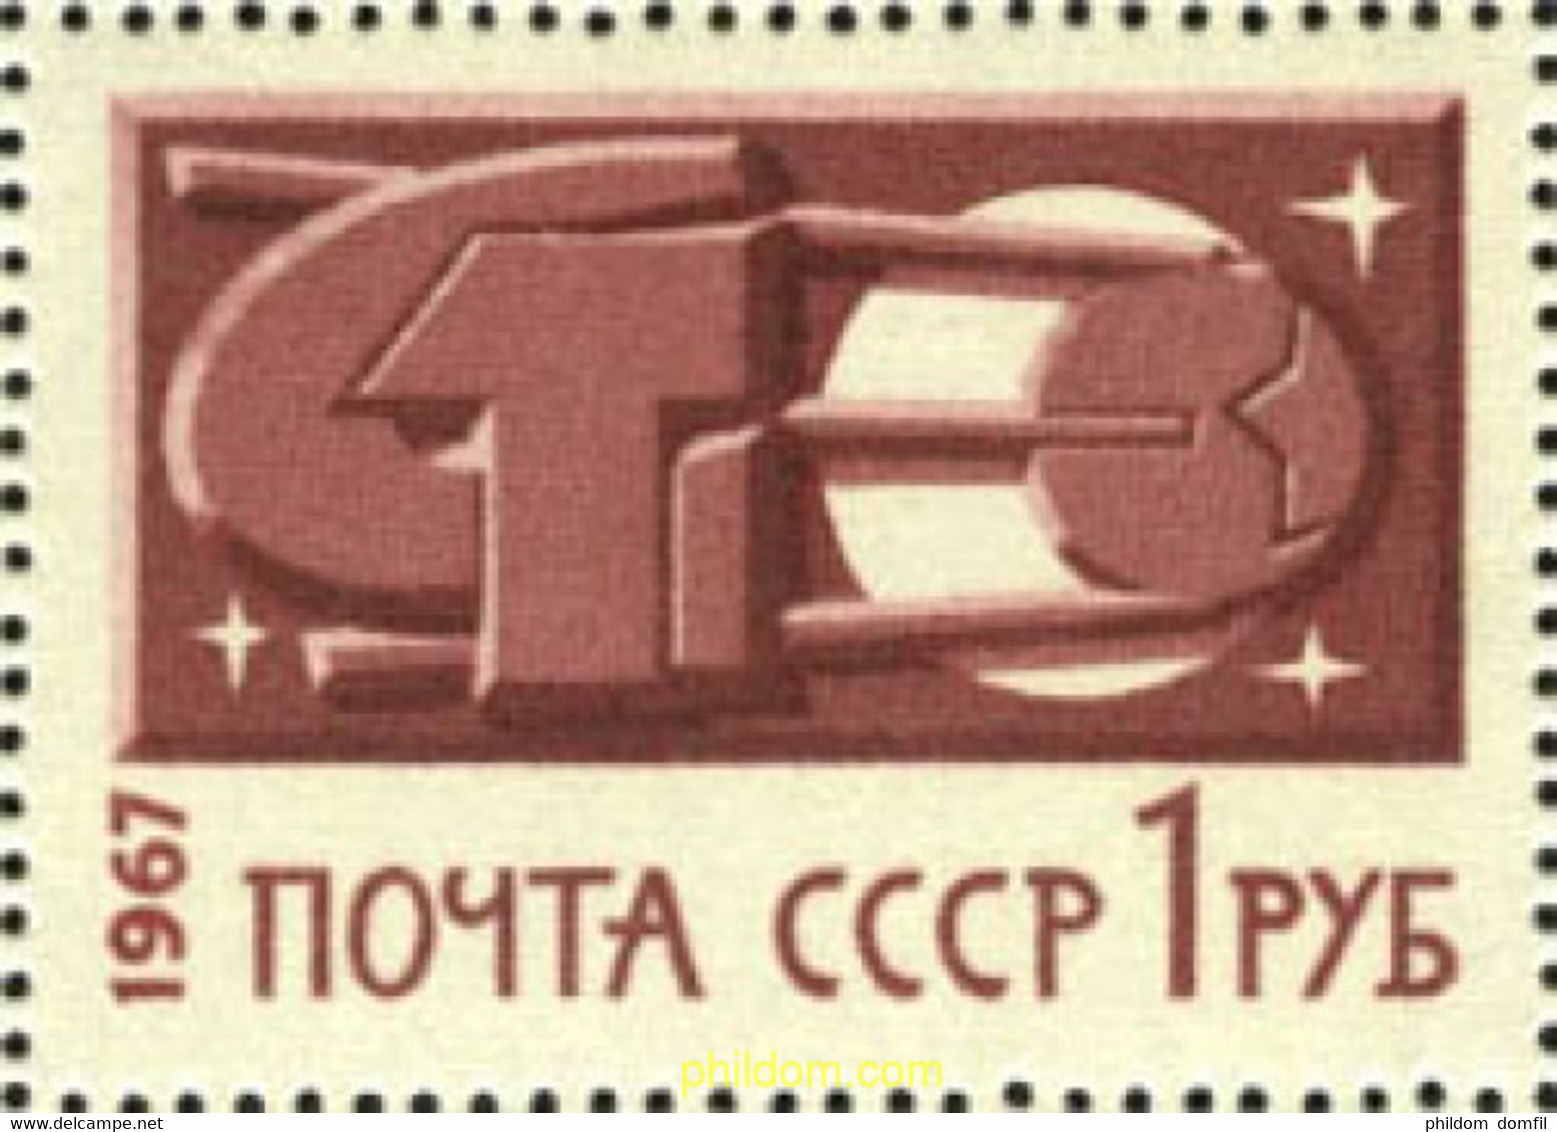 197496 MNH UNION SOVIETICA 1967 50 ANIVERSARIO DE LA REVOLUCION DE OCTUBRE - Verzamelingen